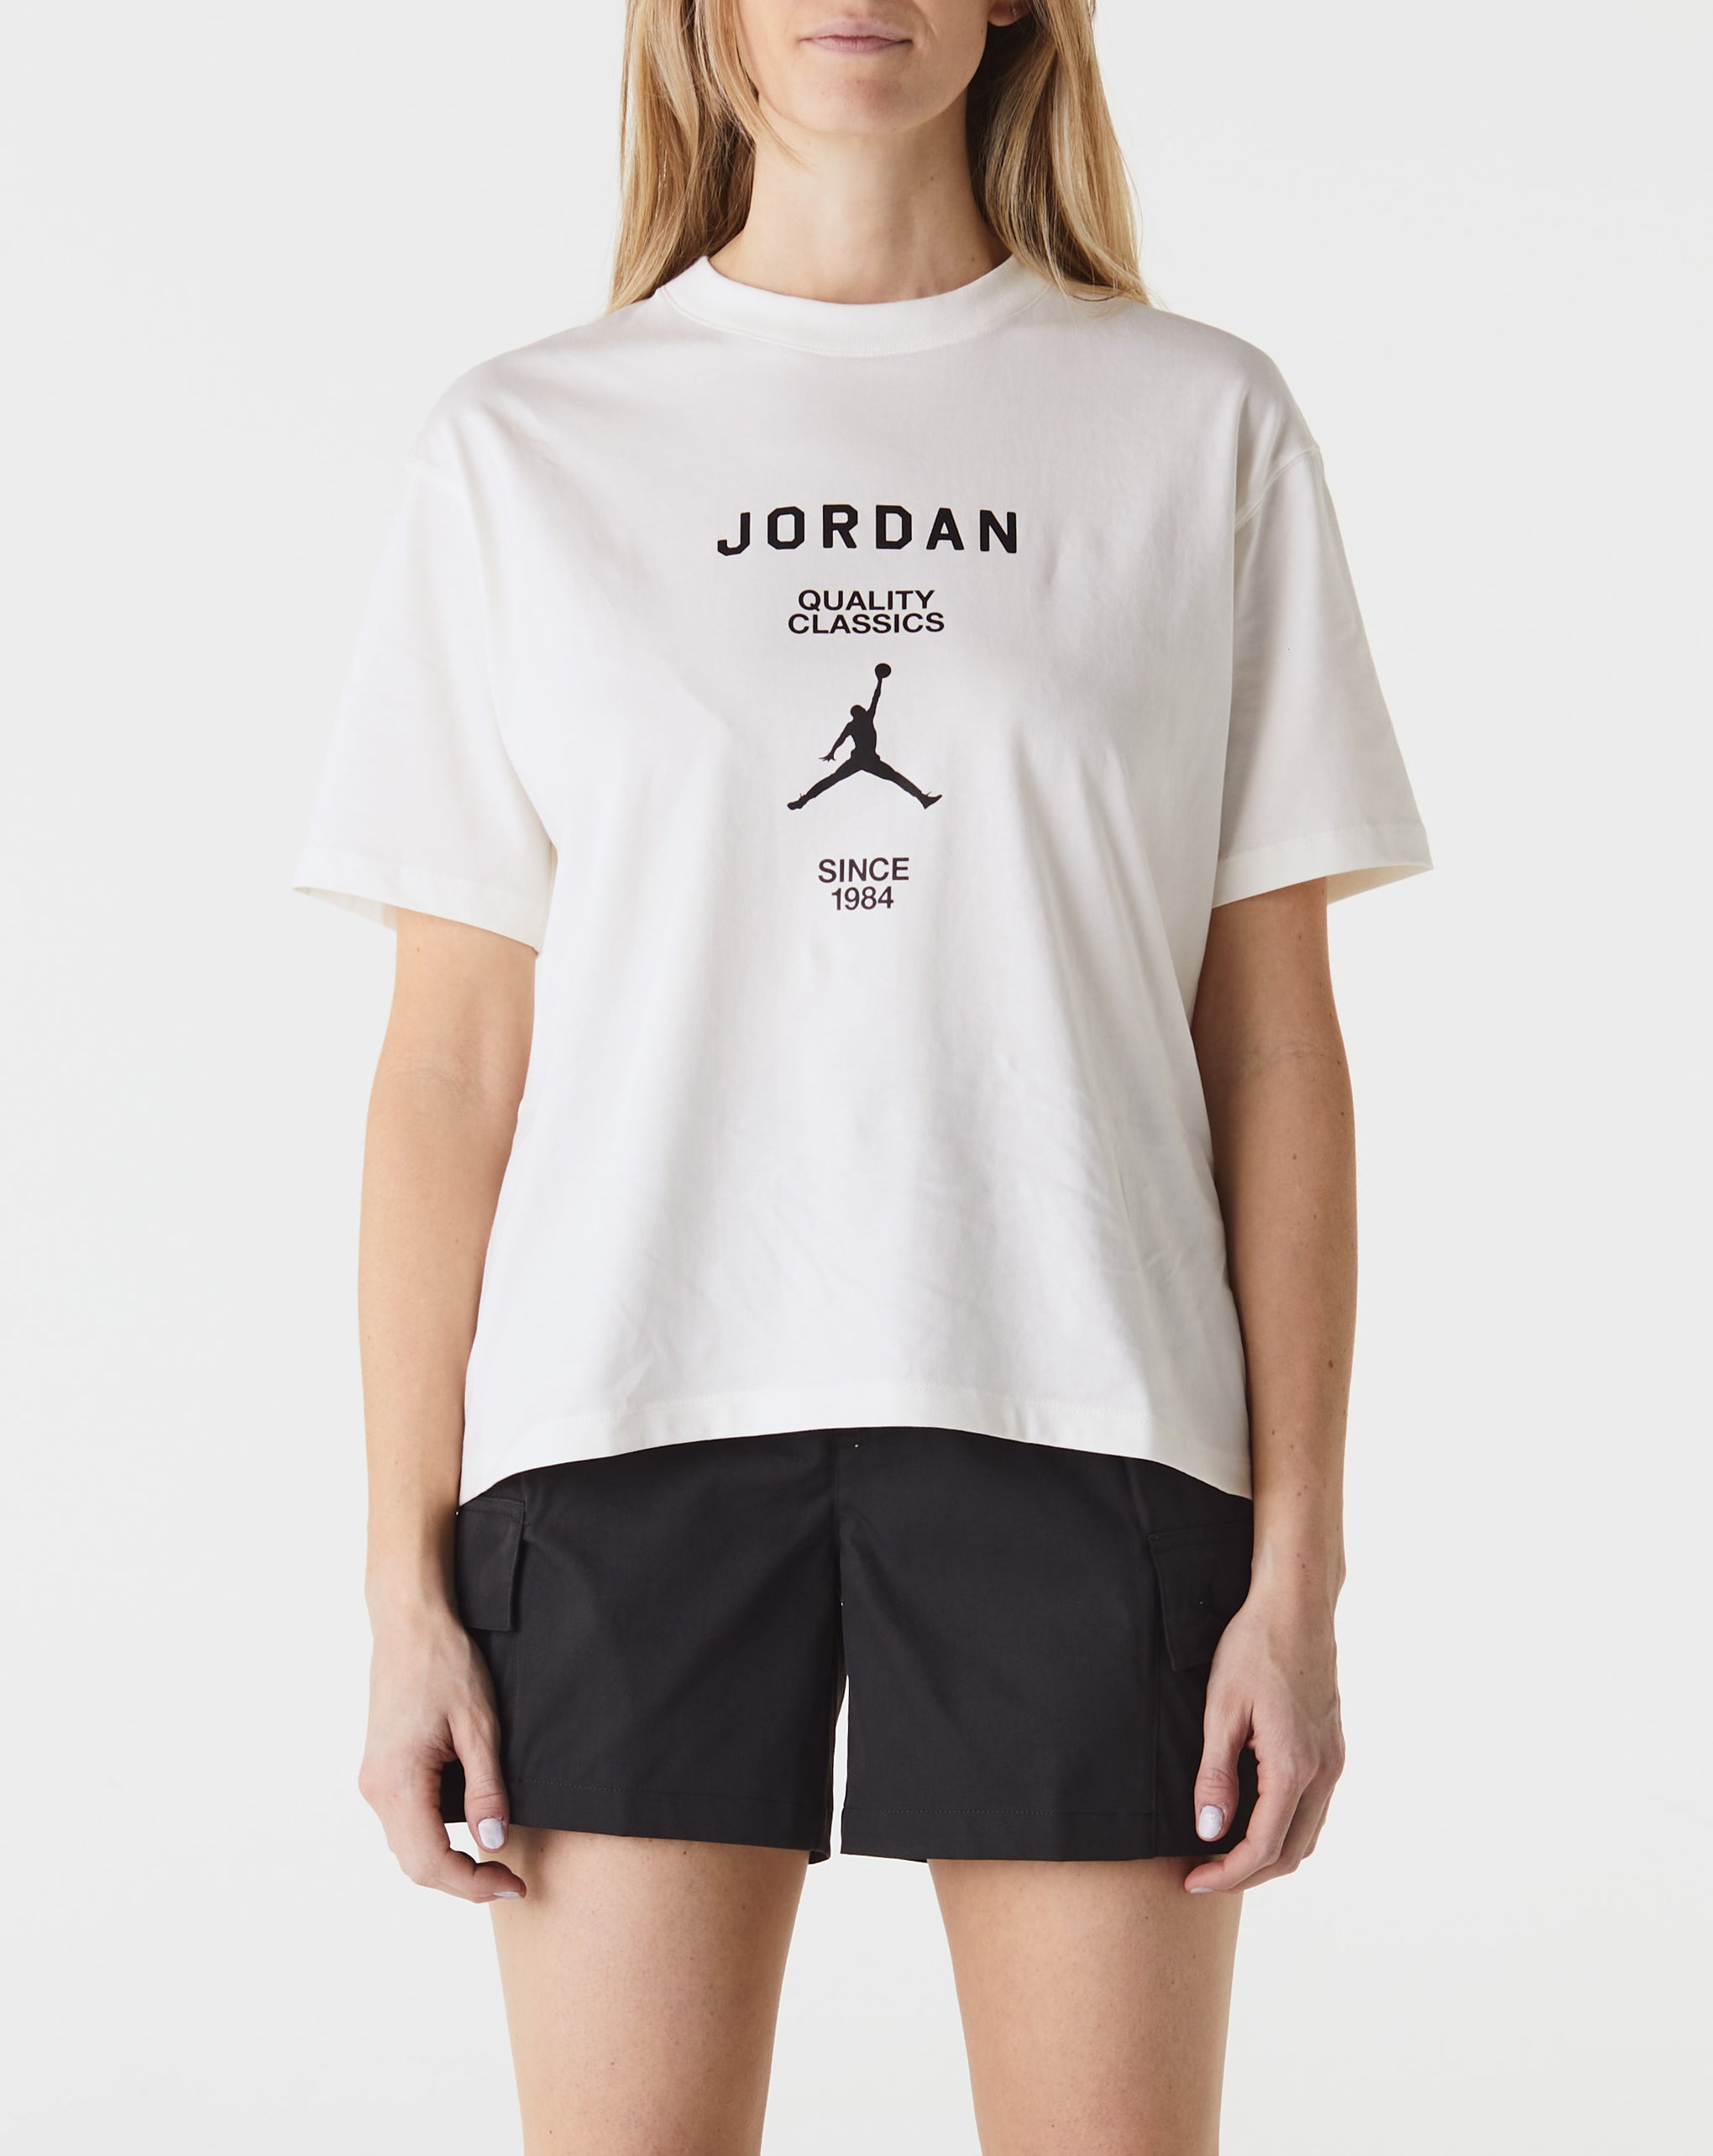 Air Jordan - Rule of Next